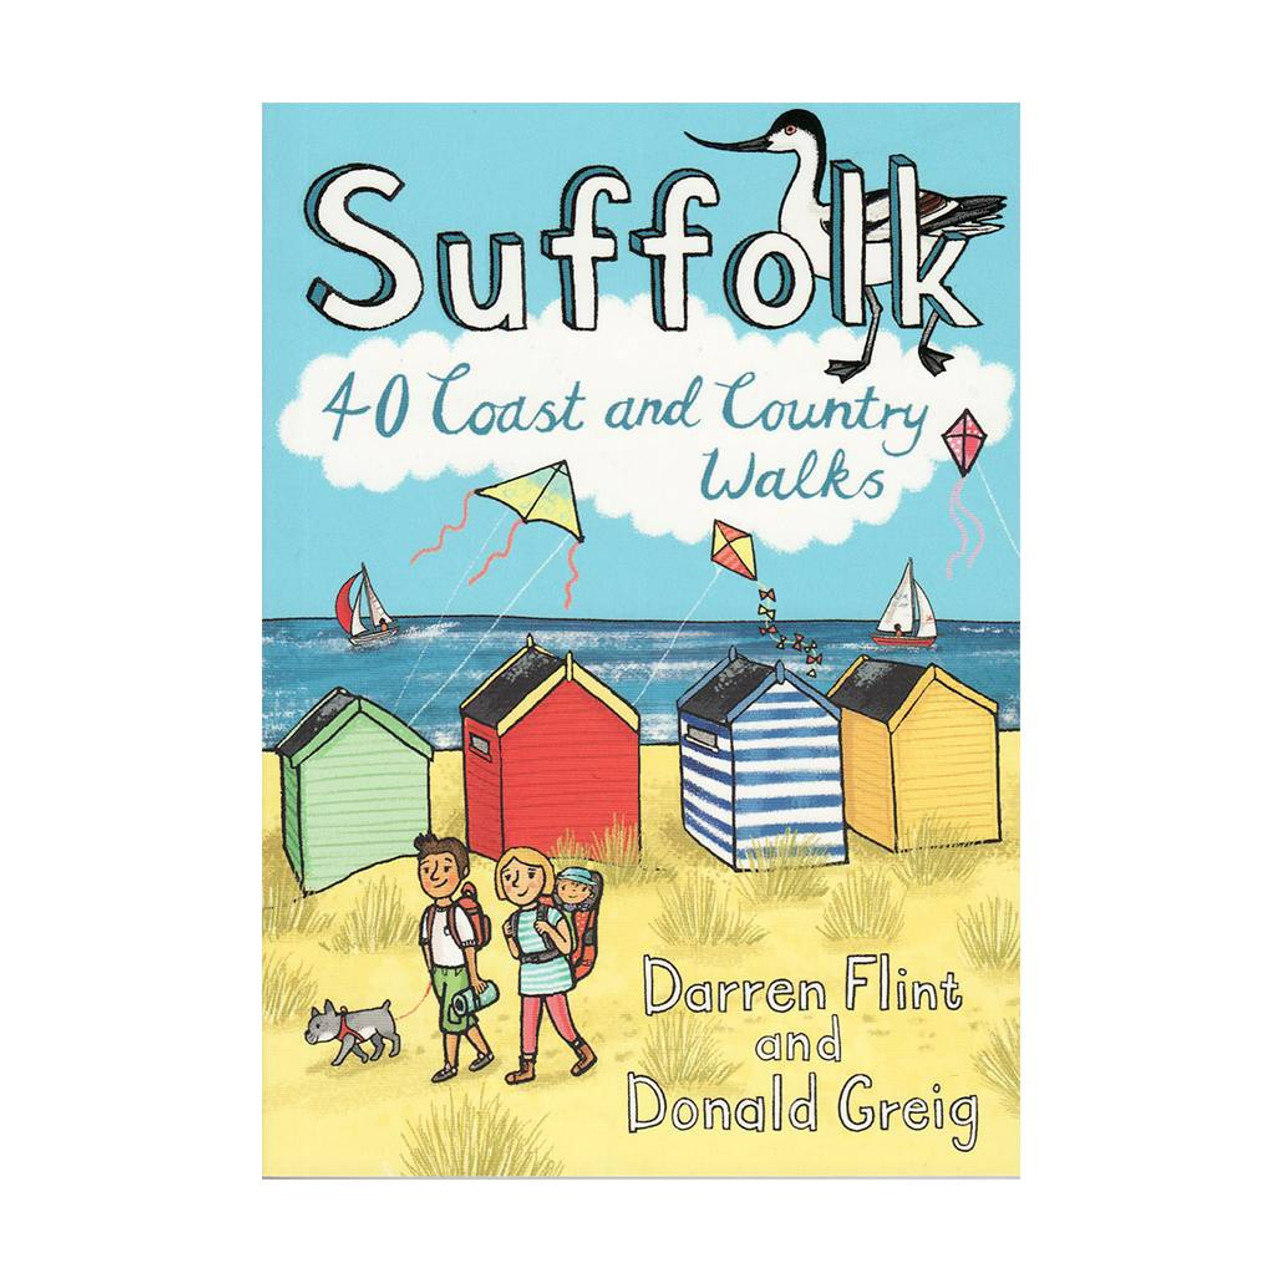 Suffolk: 40 CoastandCountry Walks